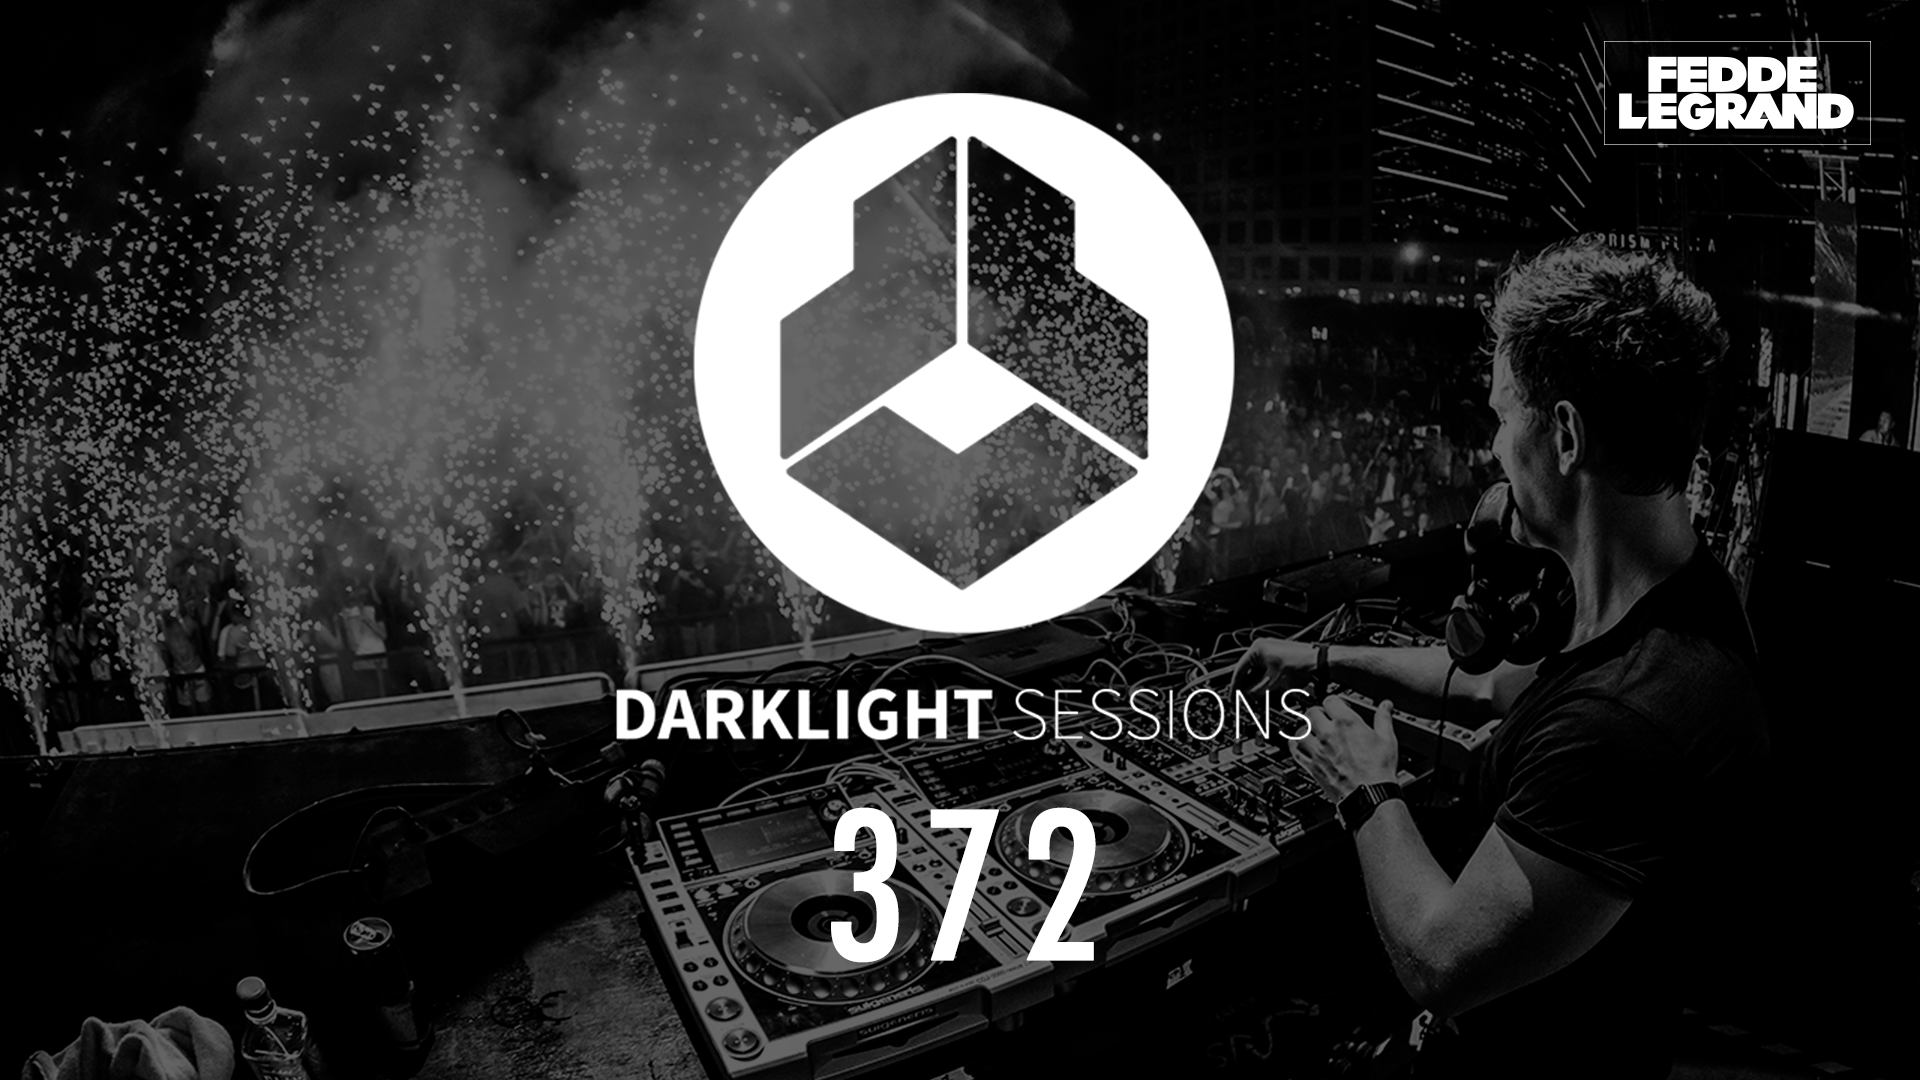 Darklight Sessions 372